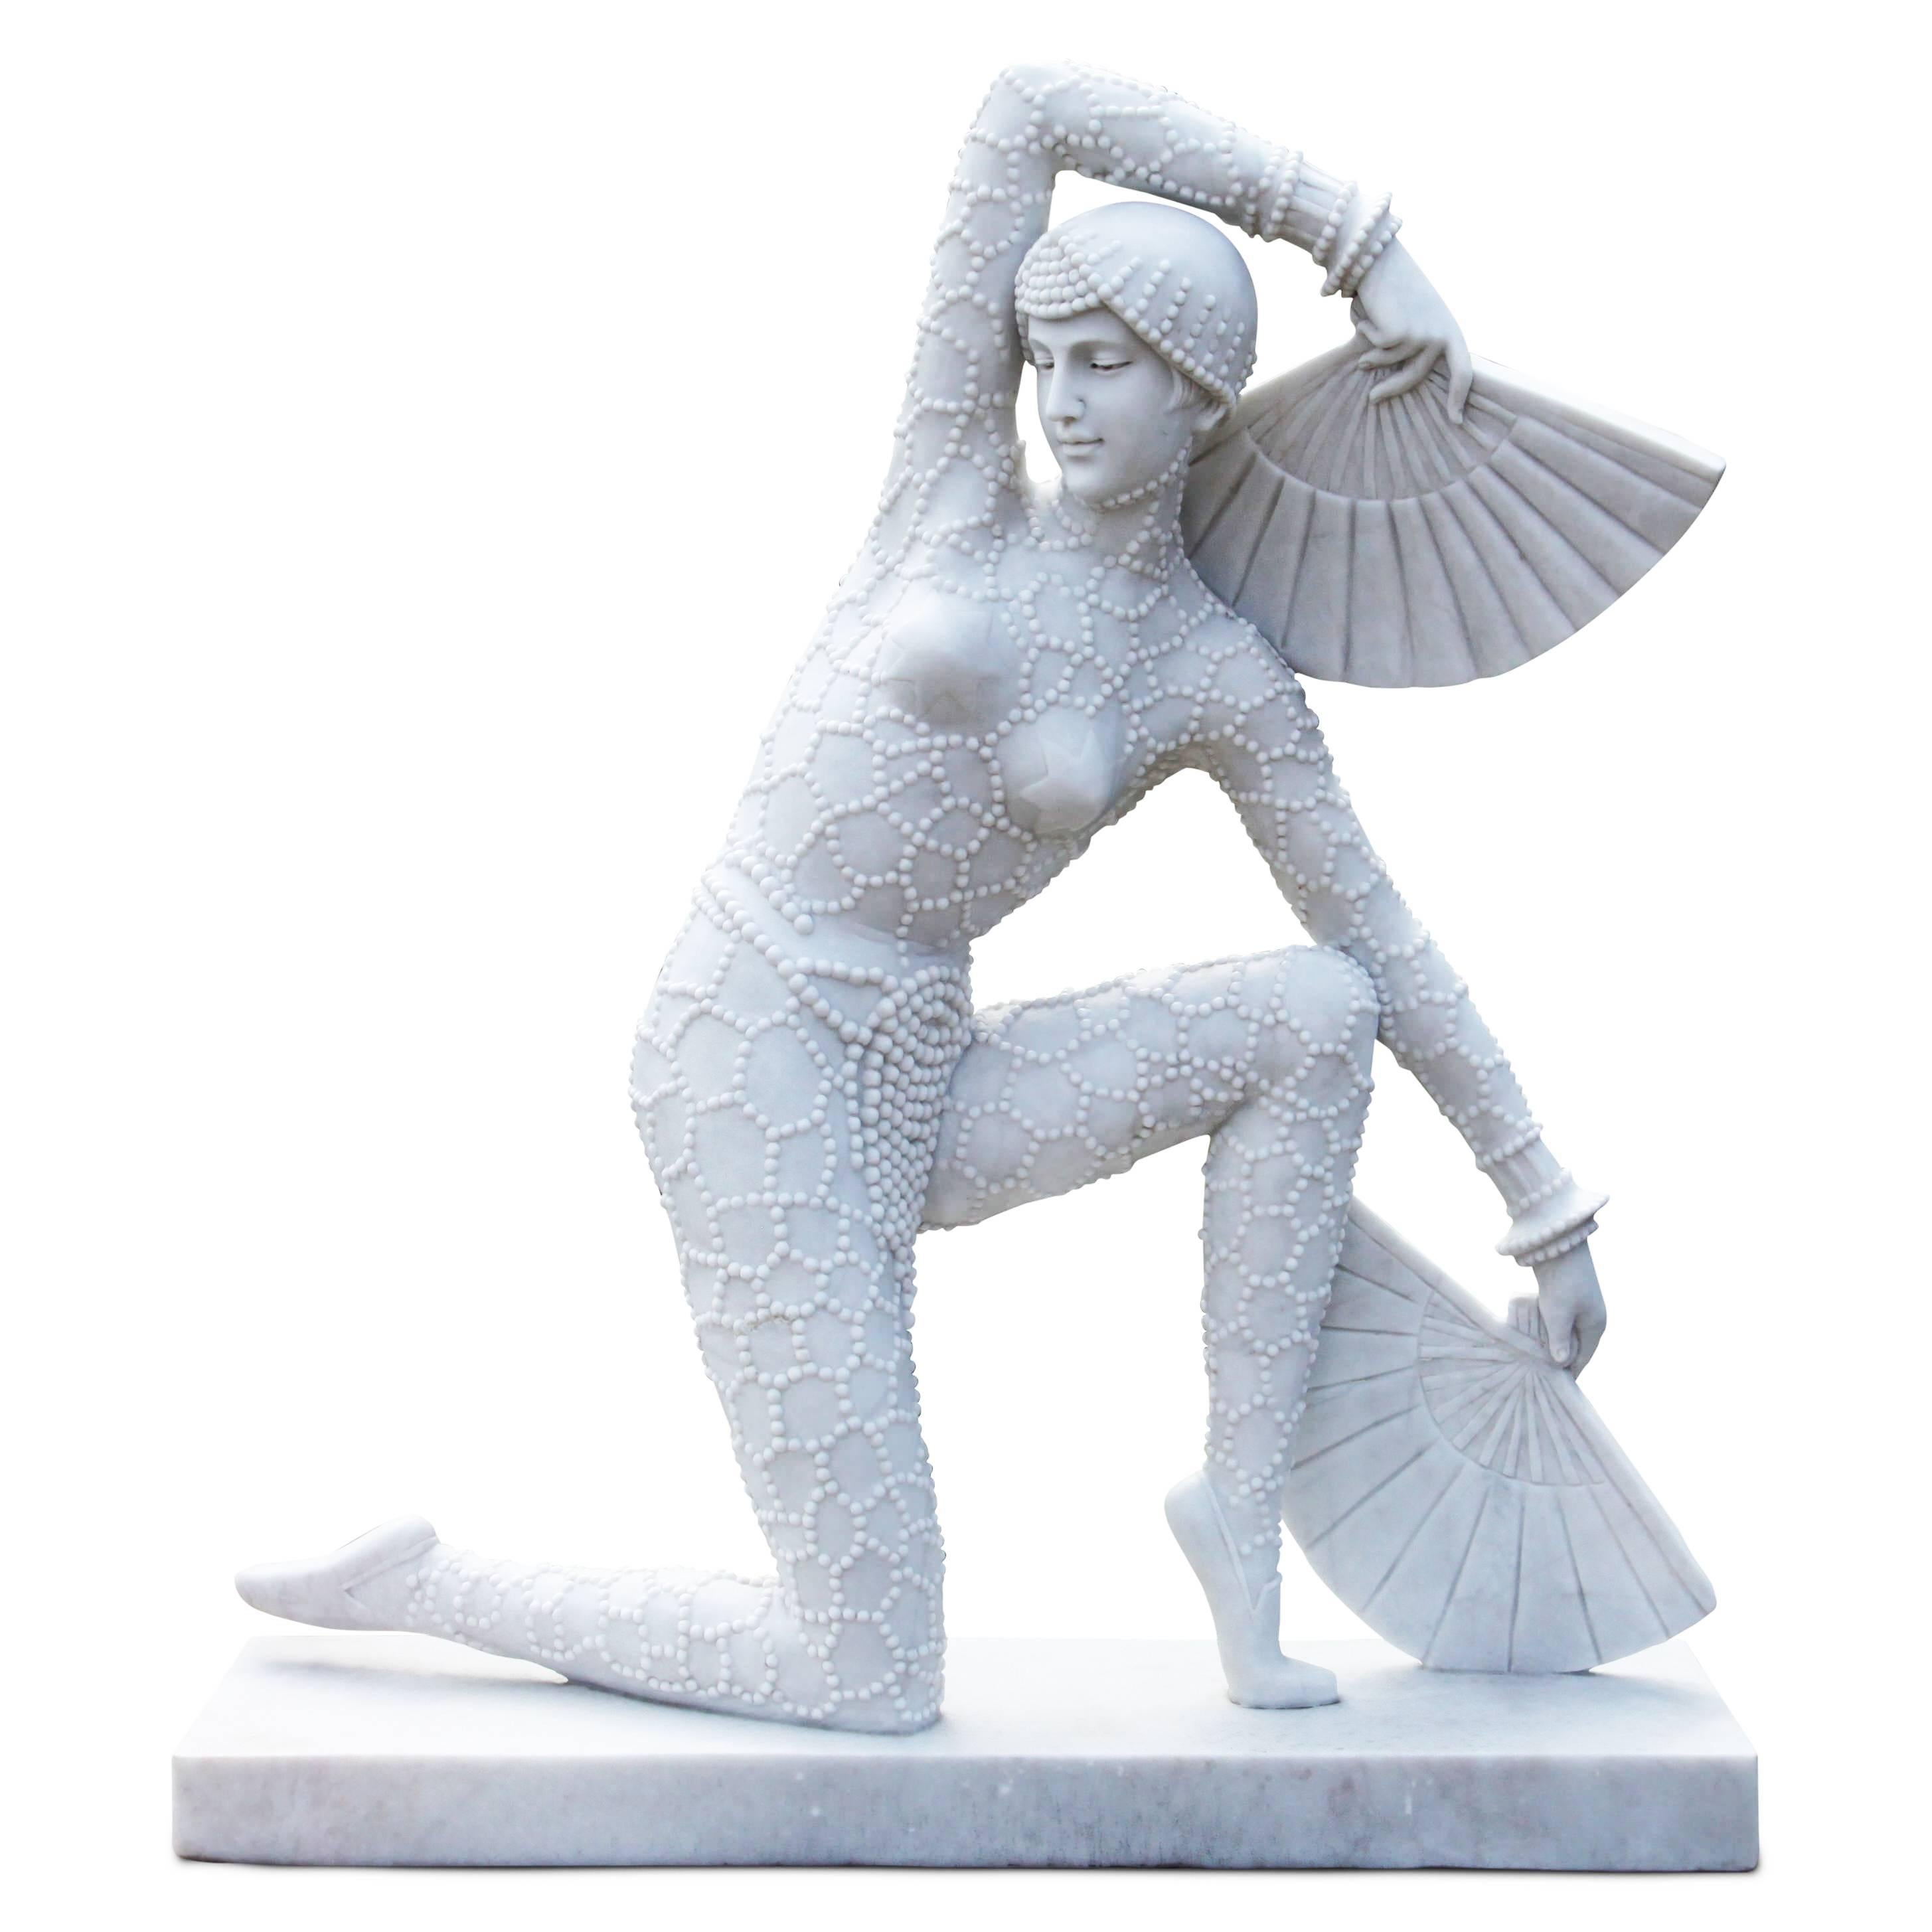 Marble Sculpture of an Art Deco-Style Dancer, 21st Century